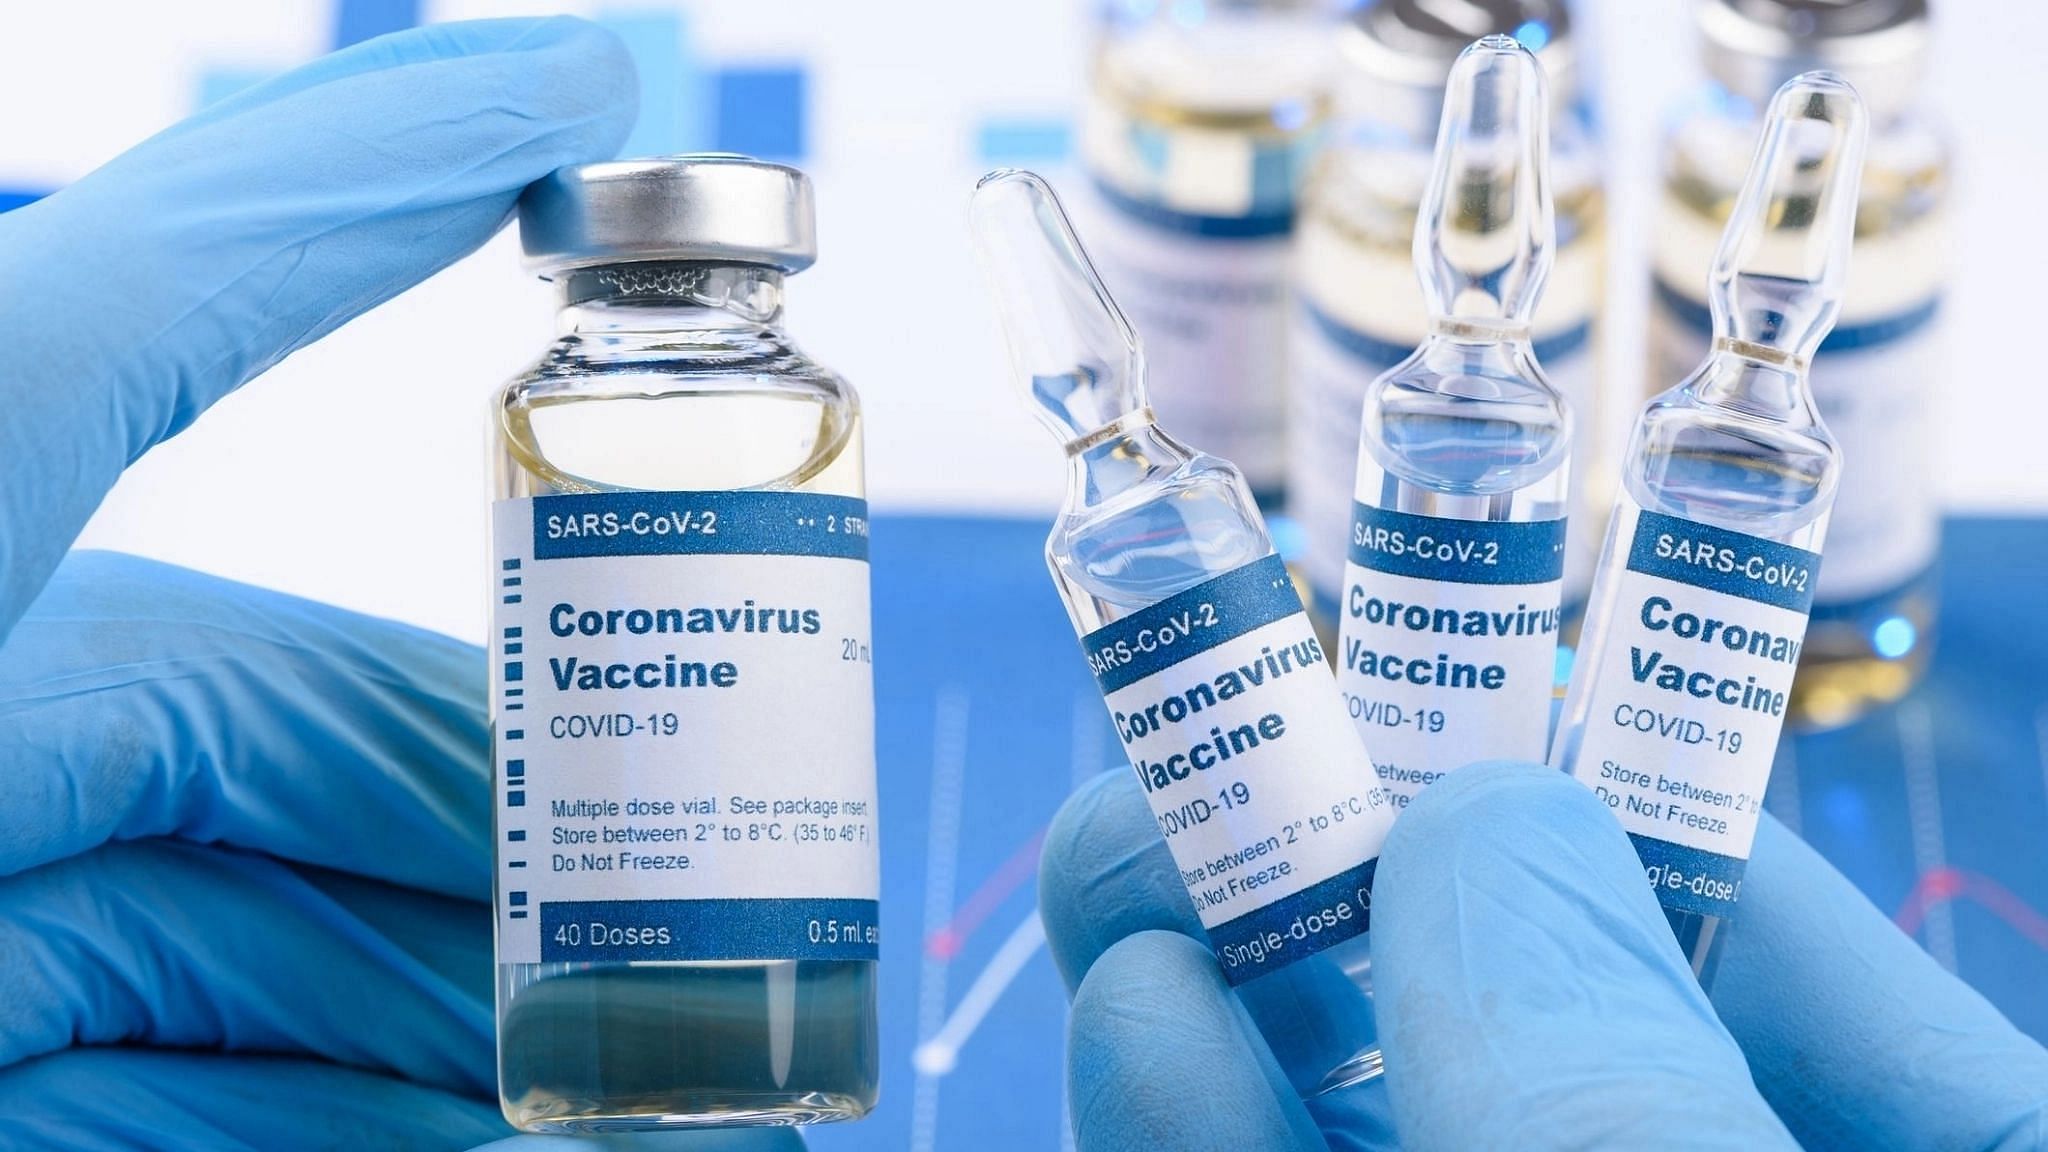 centre approved 3 new covid vaccine